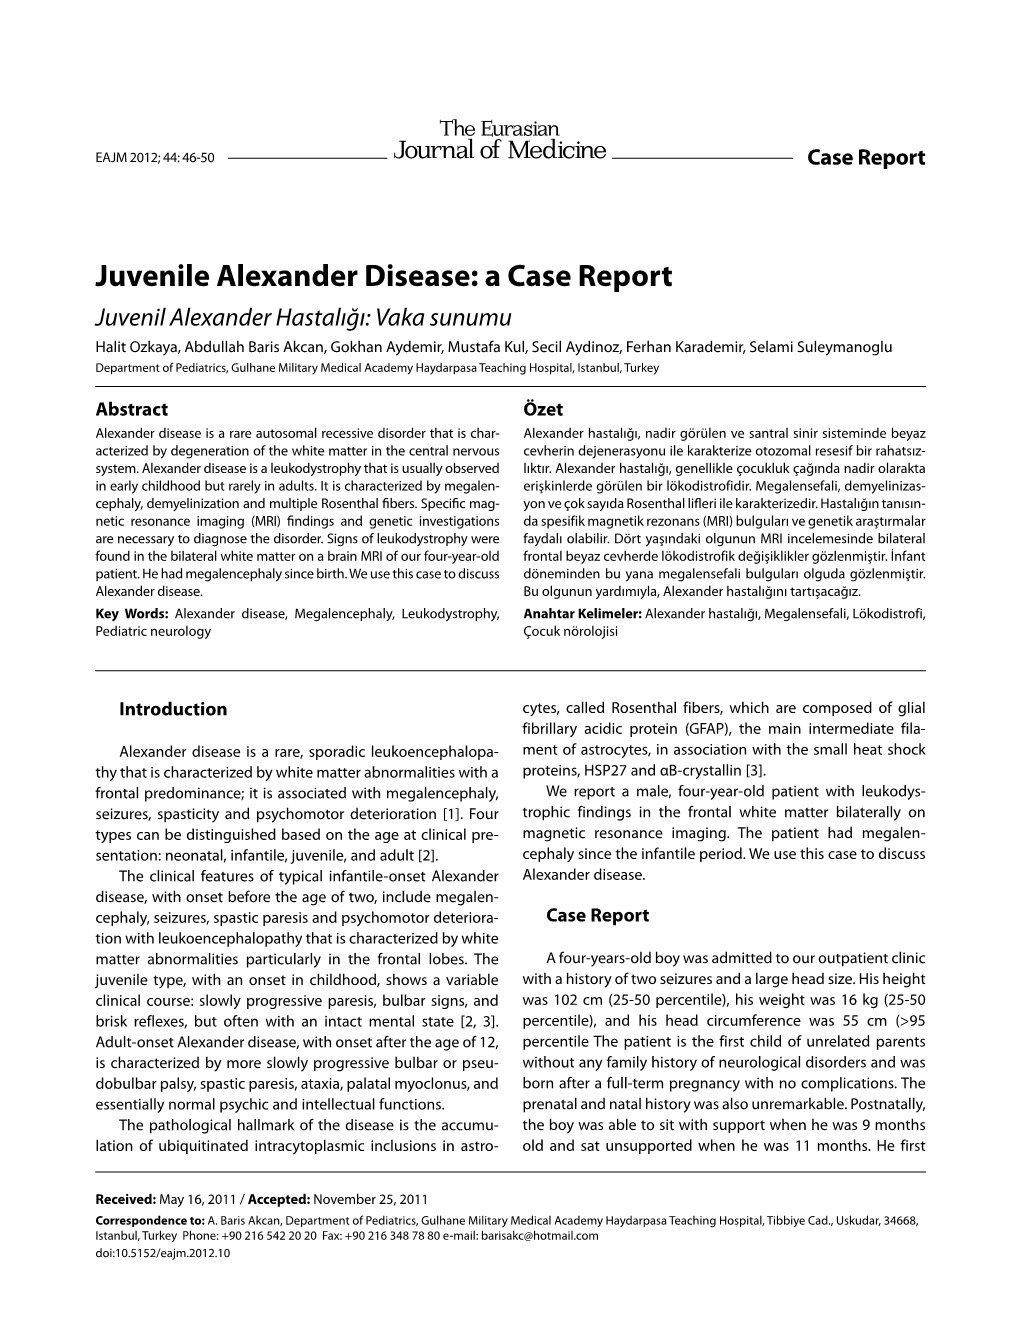 Juvenile Alexander Disease: a Case Report